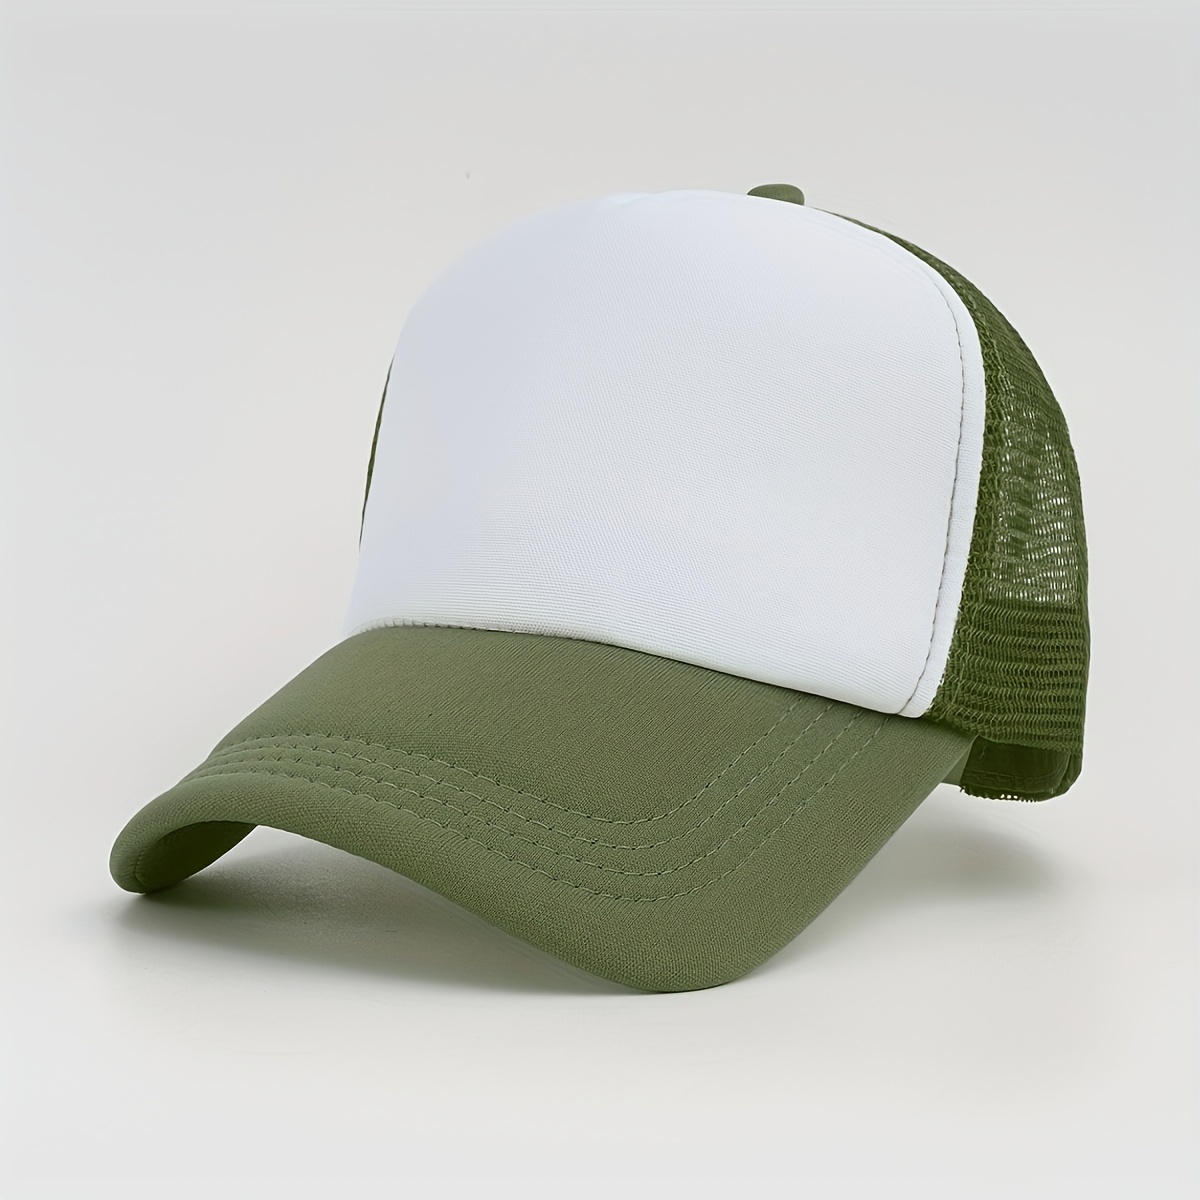 Gravity Threads Lion of Judah Adjustable Trucker Hat, White/Neon Green